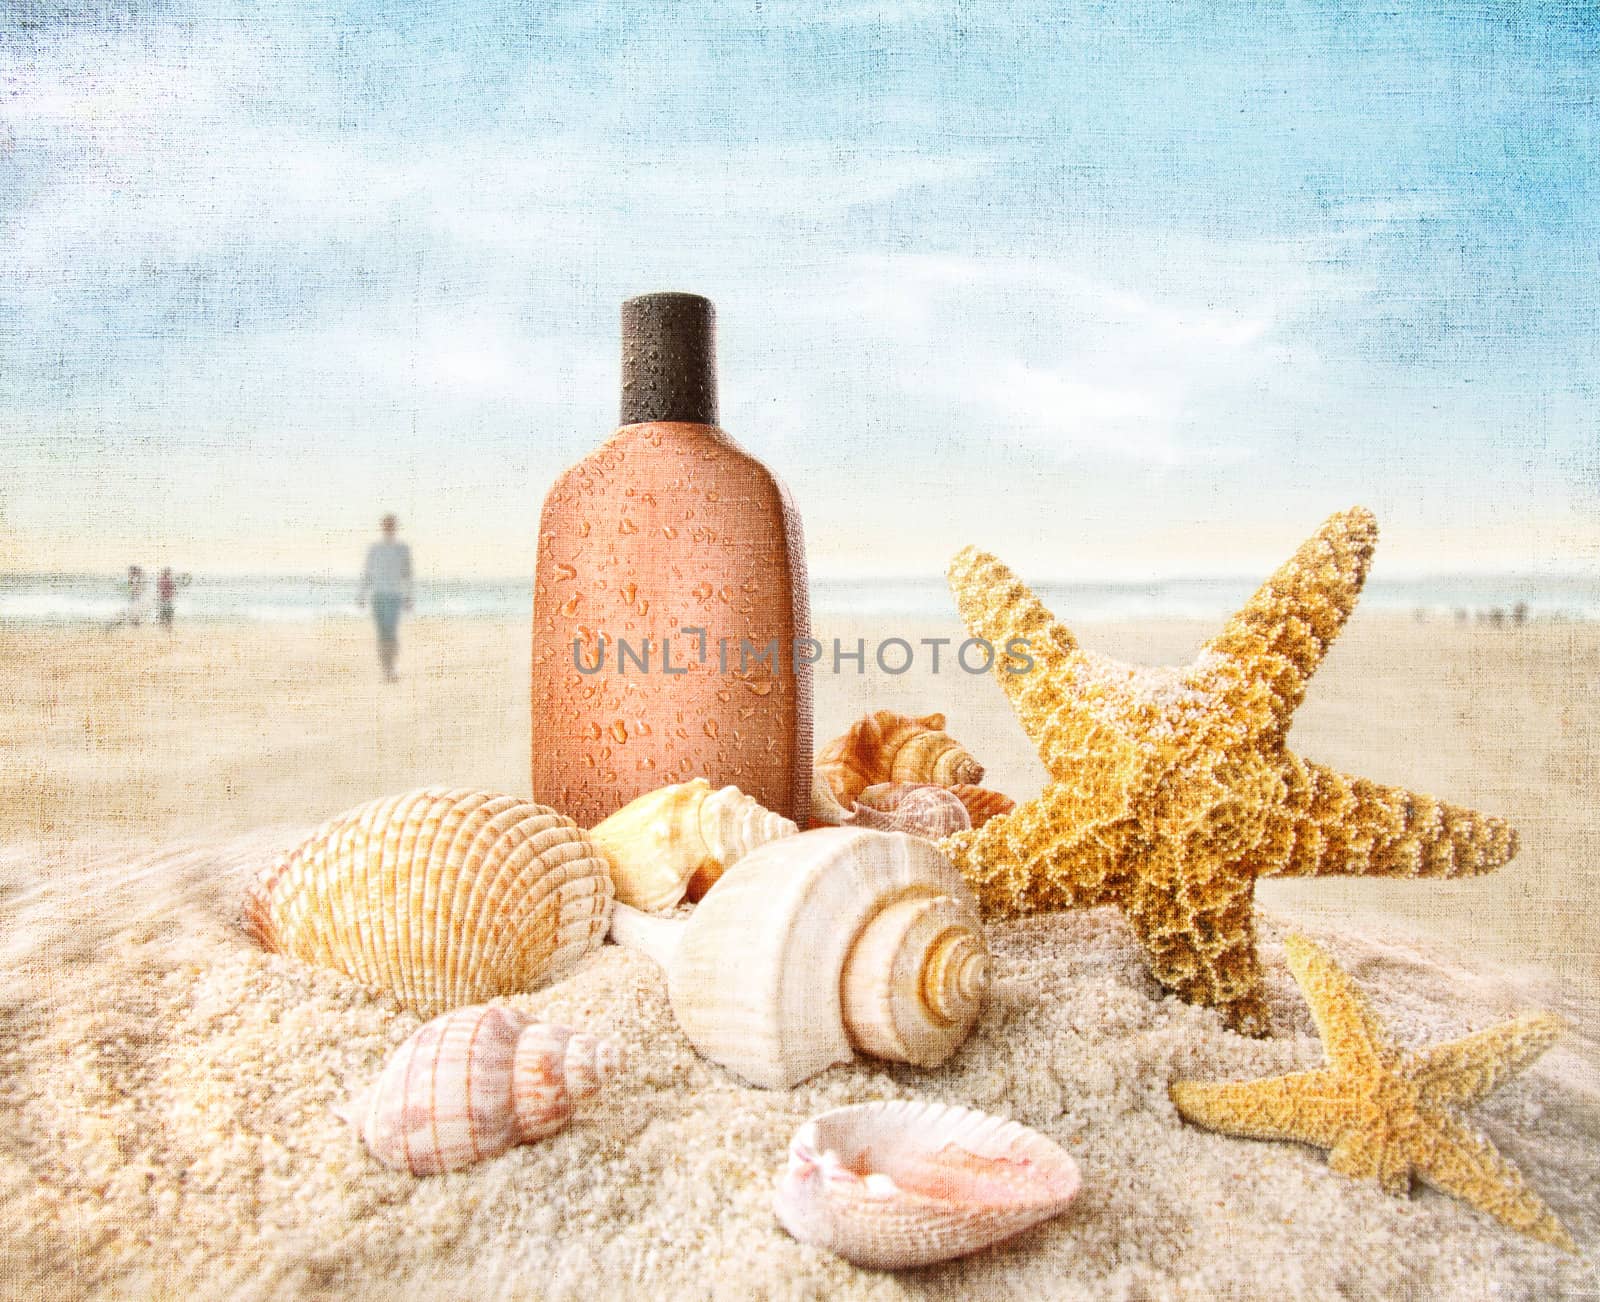 Suntan lotion and seashells on the beach by Sandralise